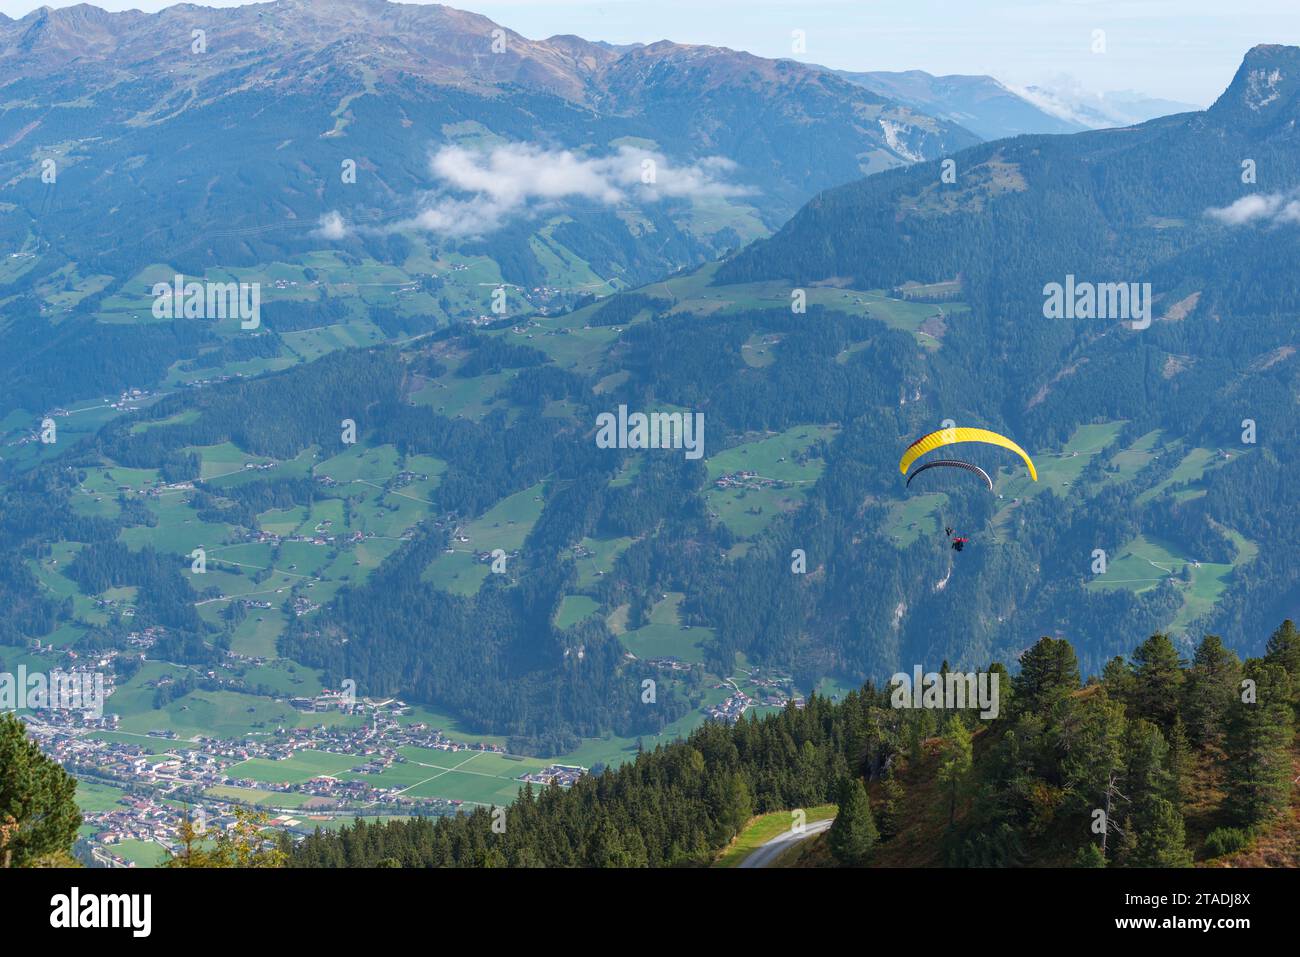 Paragliding flights from Mount Penken (2095m), Tandem-Paragliding Mayrhofen, Zillertal Alps, TYrol, Austria Stock Photo